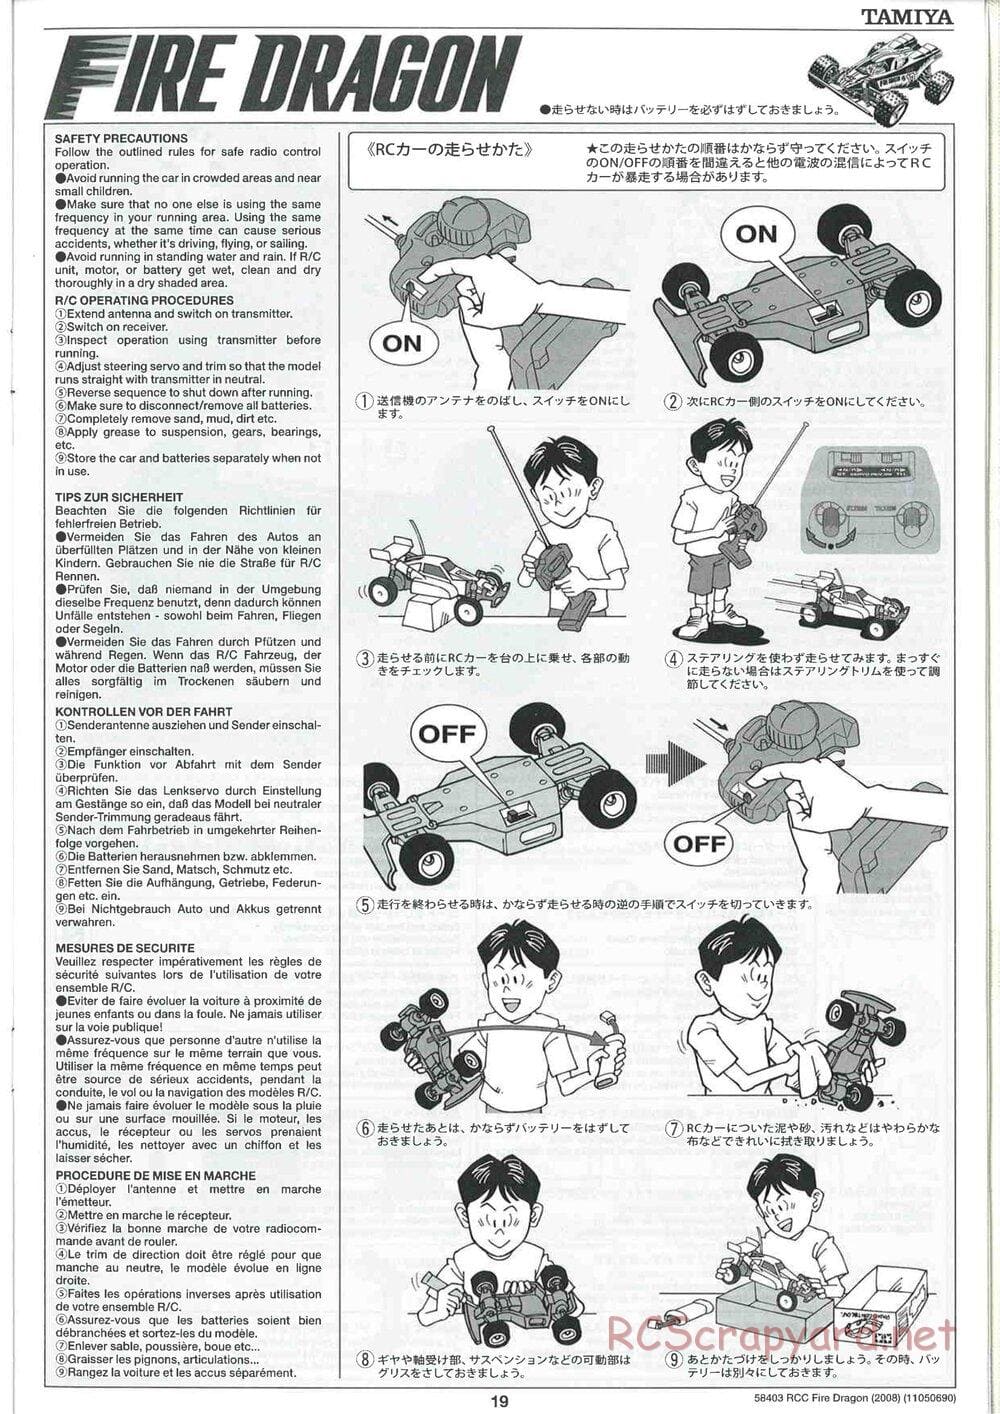 Tamiya - Fire Dragon 2008 - TS2 Chassis - Manual - Page 19